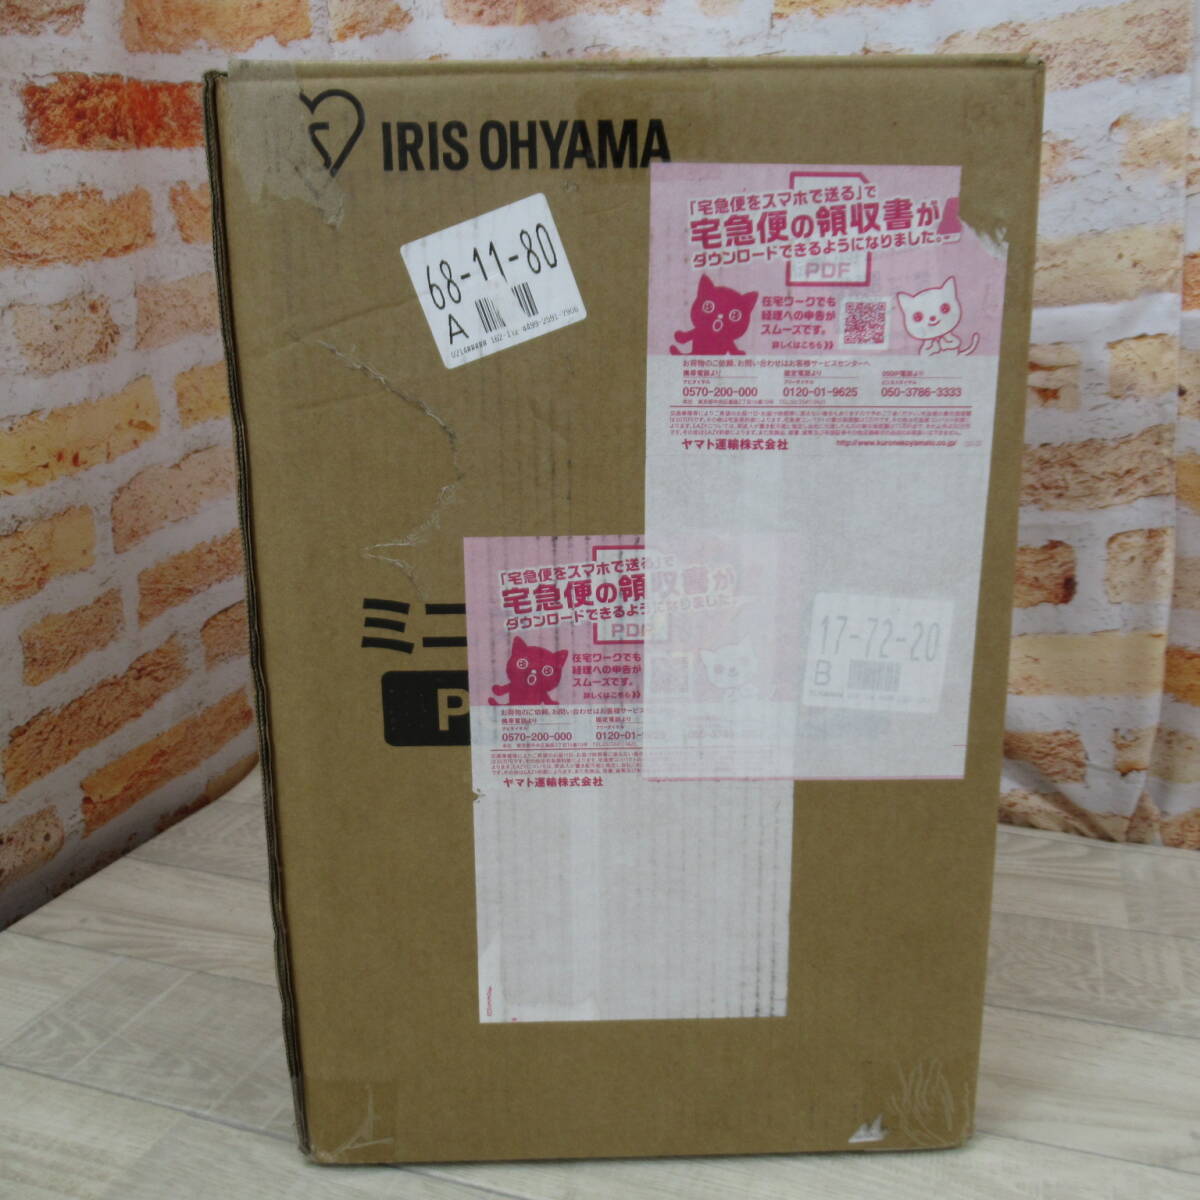 02530PS24[ unused ] Iris o-yama(IRIS OHYAMA) heater oil heater 3.3 tatami wave type 500W small size POH-505K-MD wood grain dark brown 